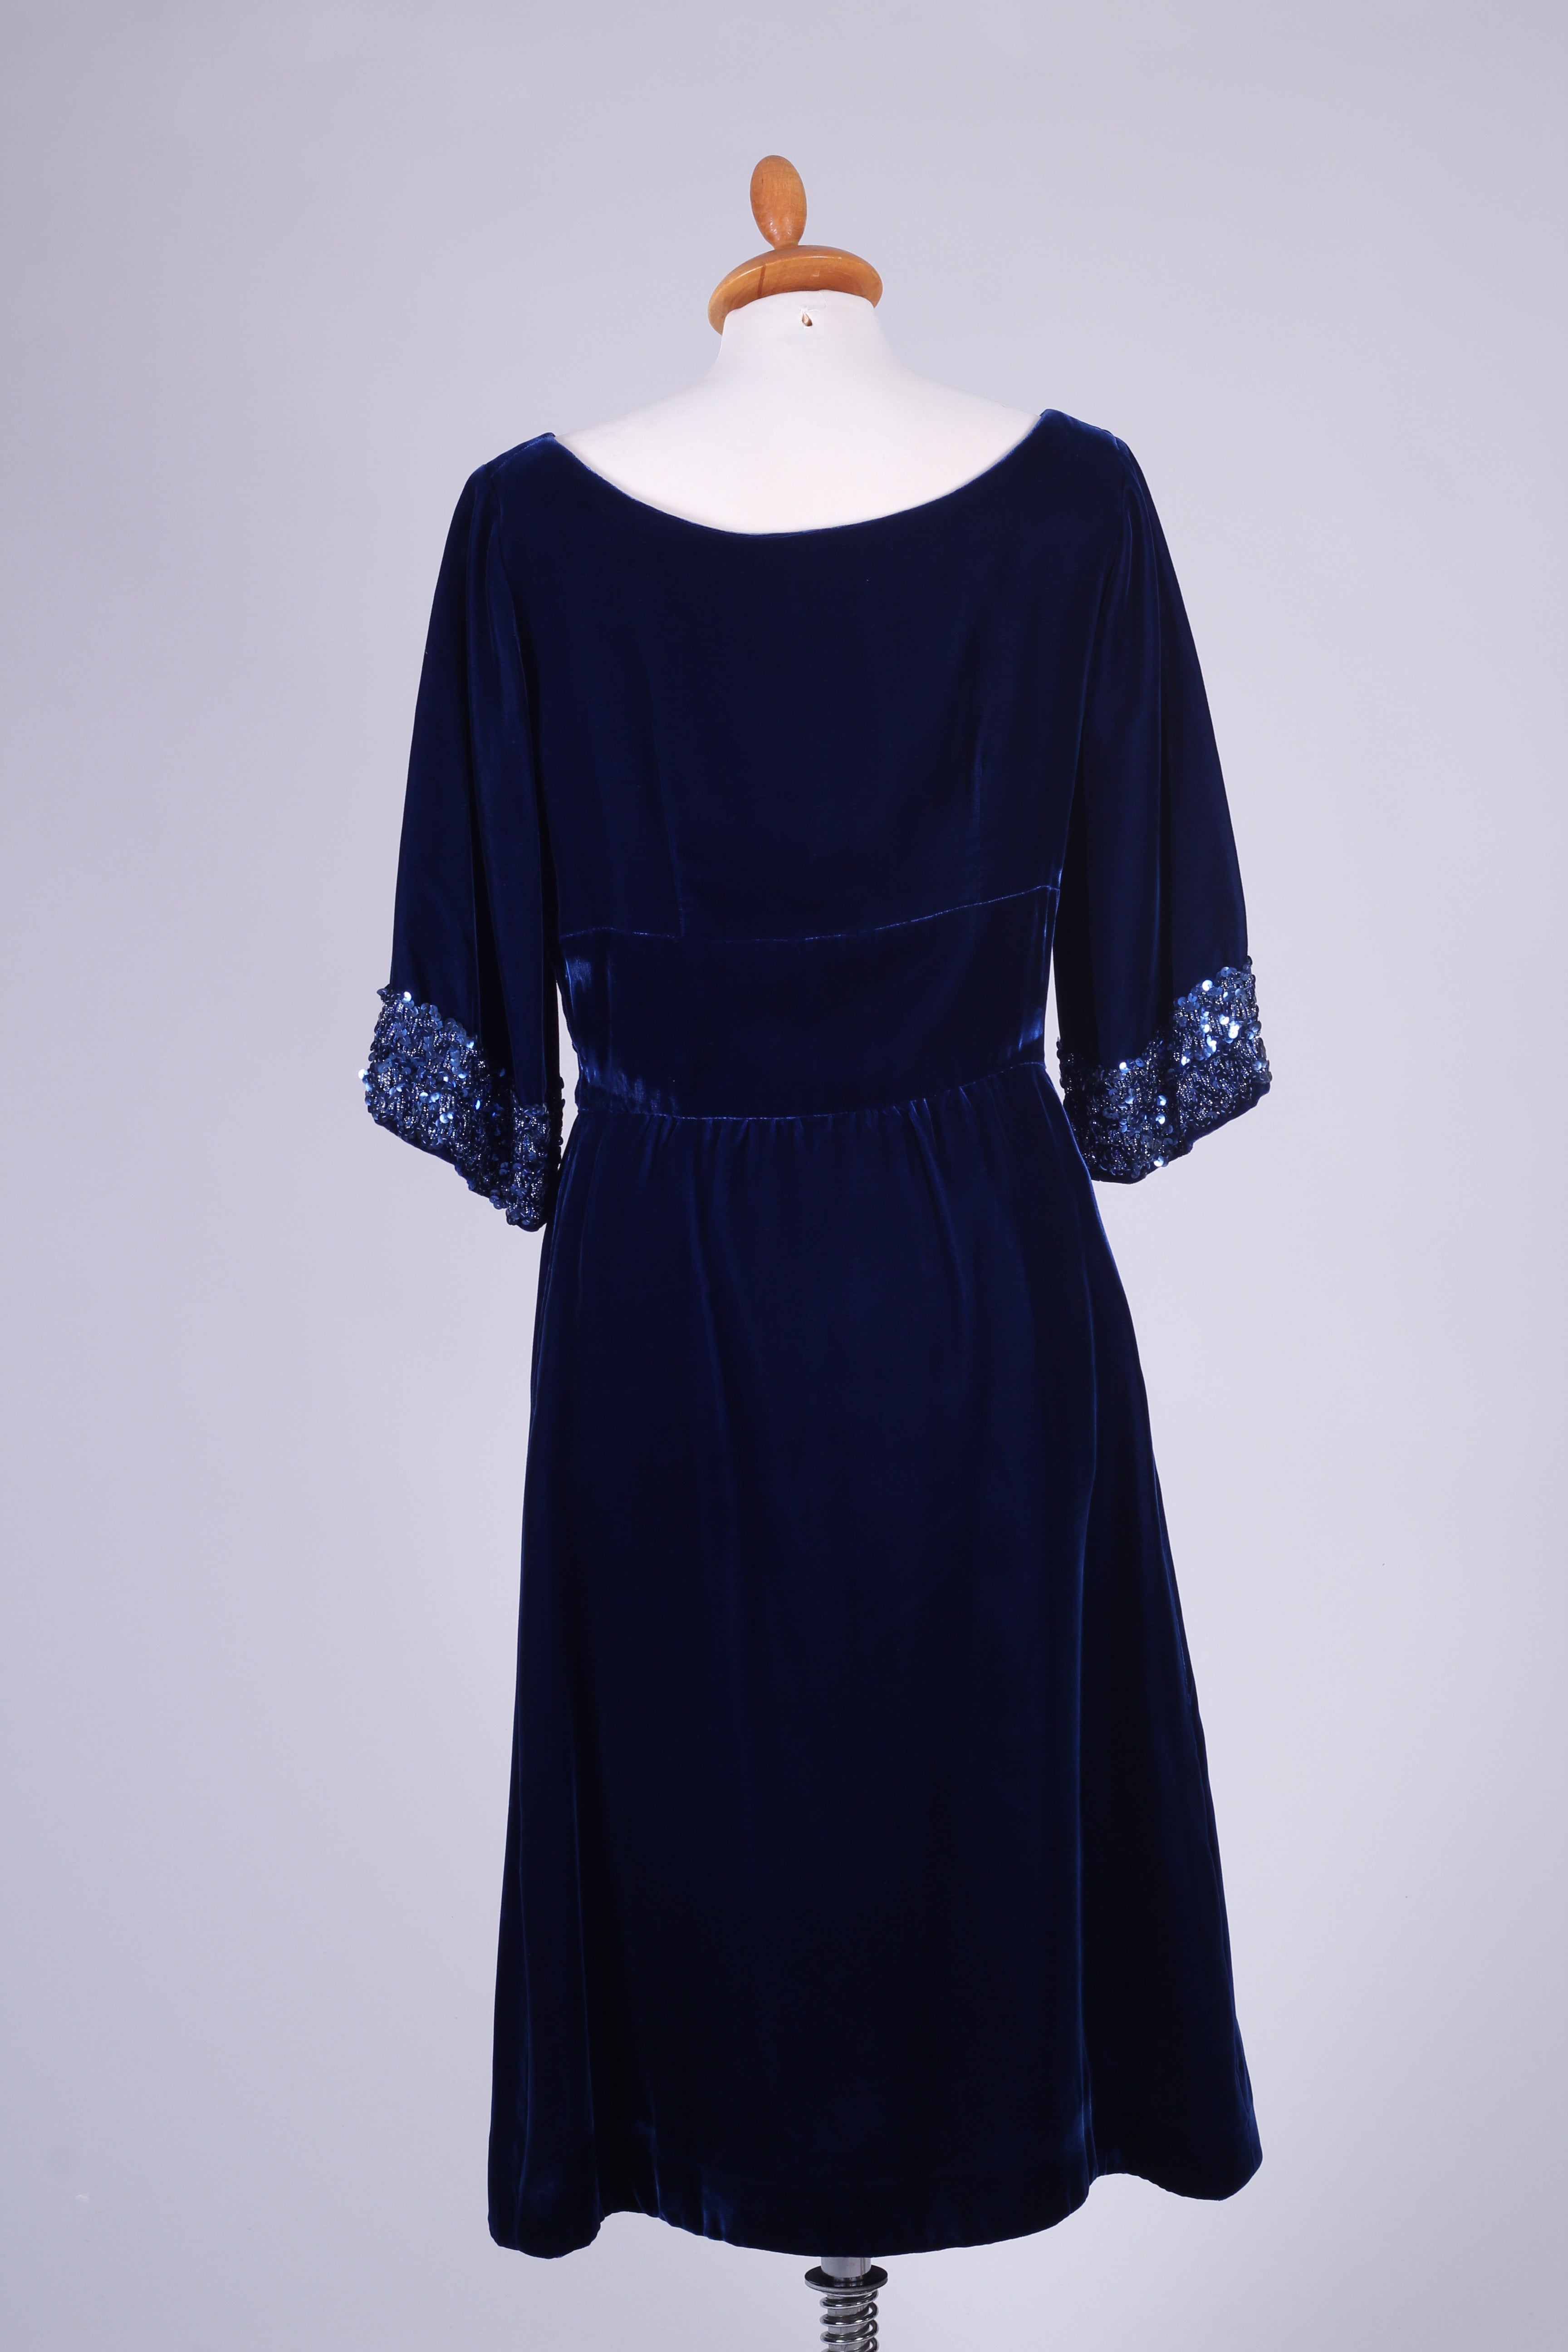 Mørkeblå skræddersyet silkevelour selskabskjole med palietter 1960'erne. S